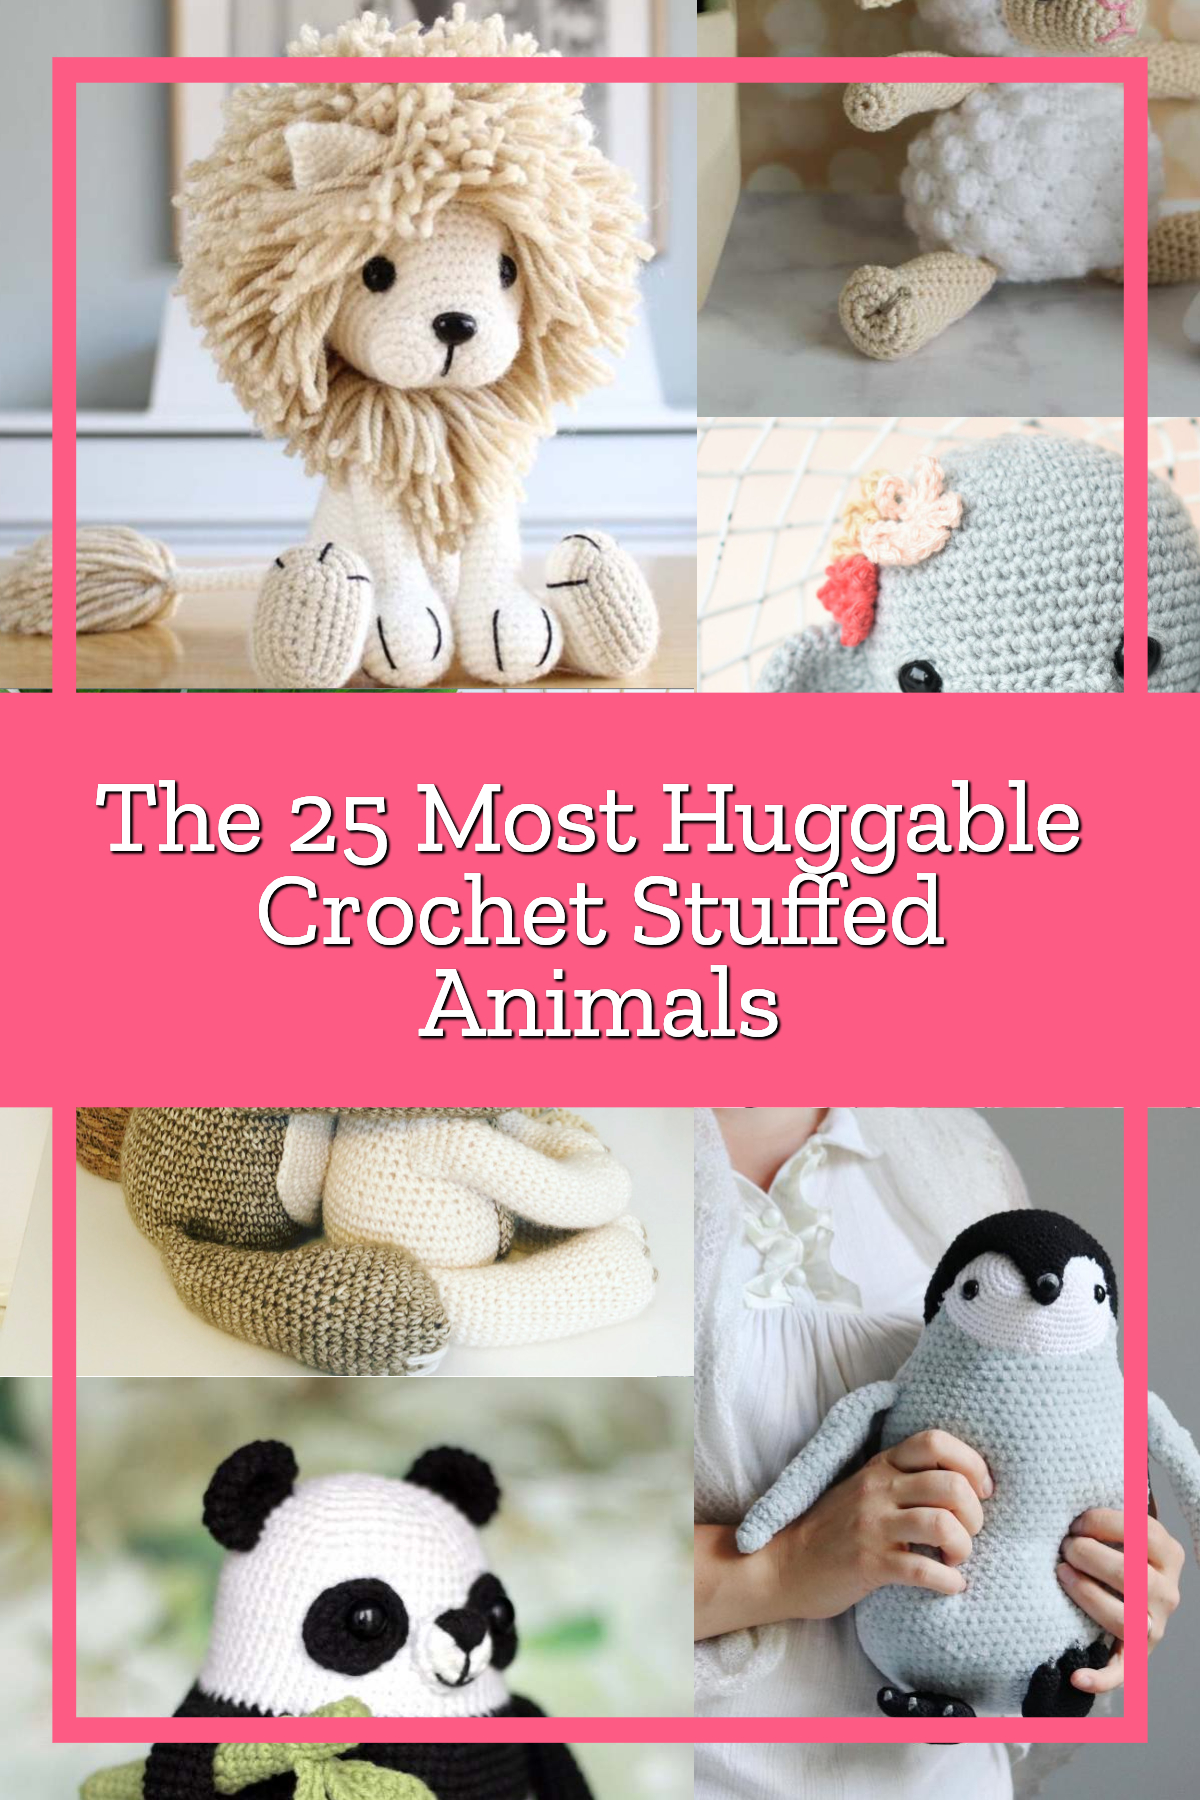 How to Crochet Stuffed Animals